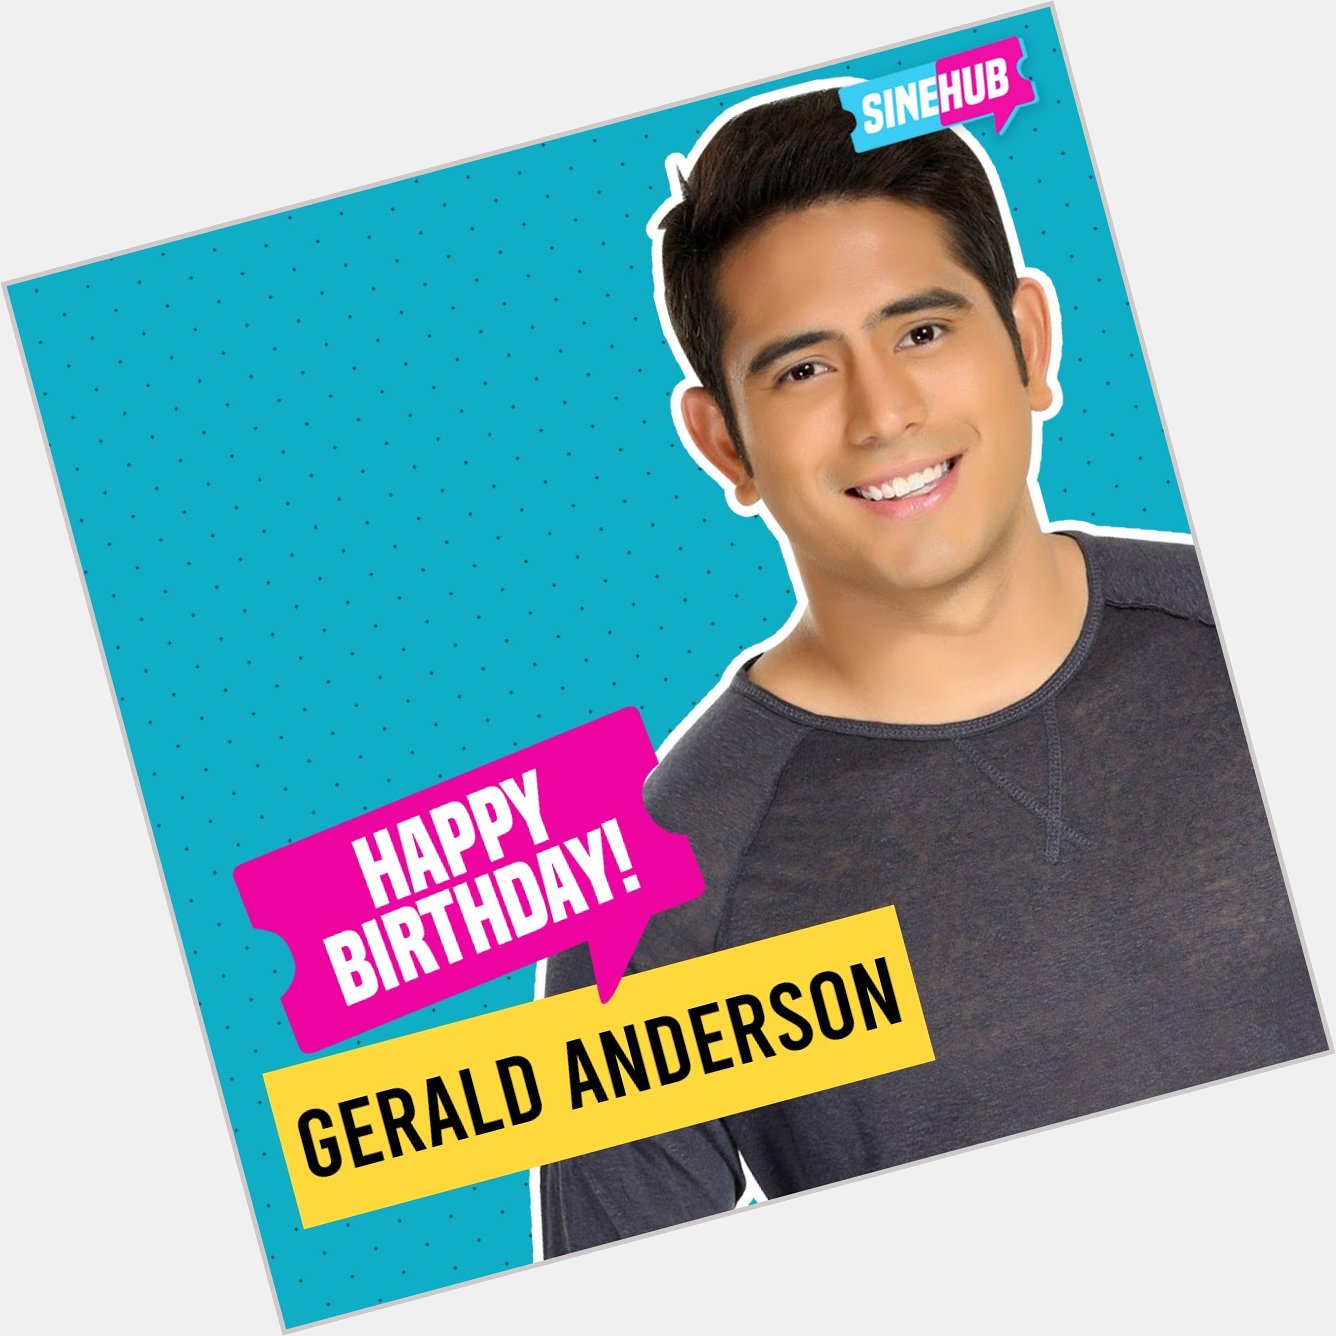 Wishing Gerald Anderson a happy birthday!    